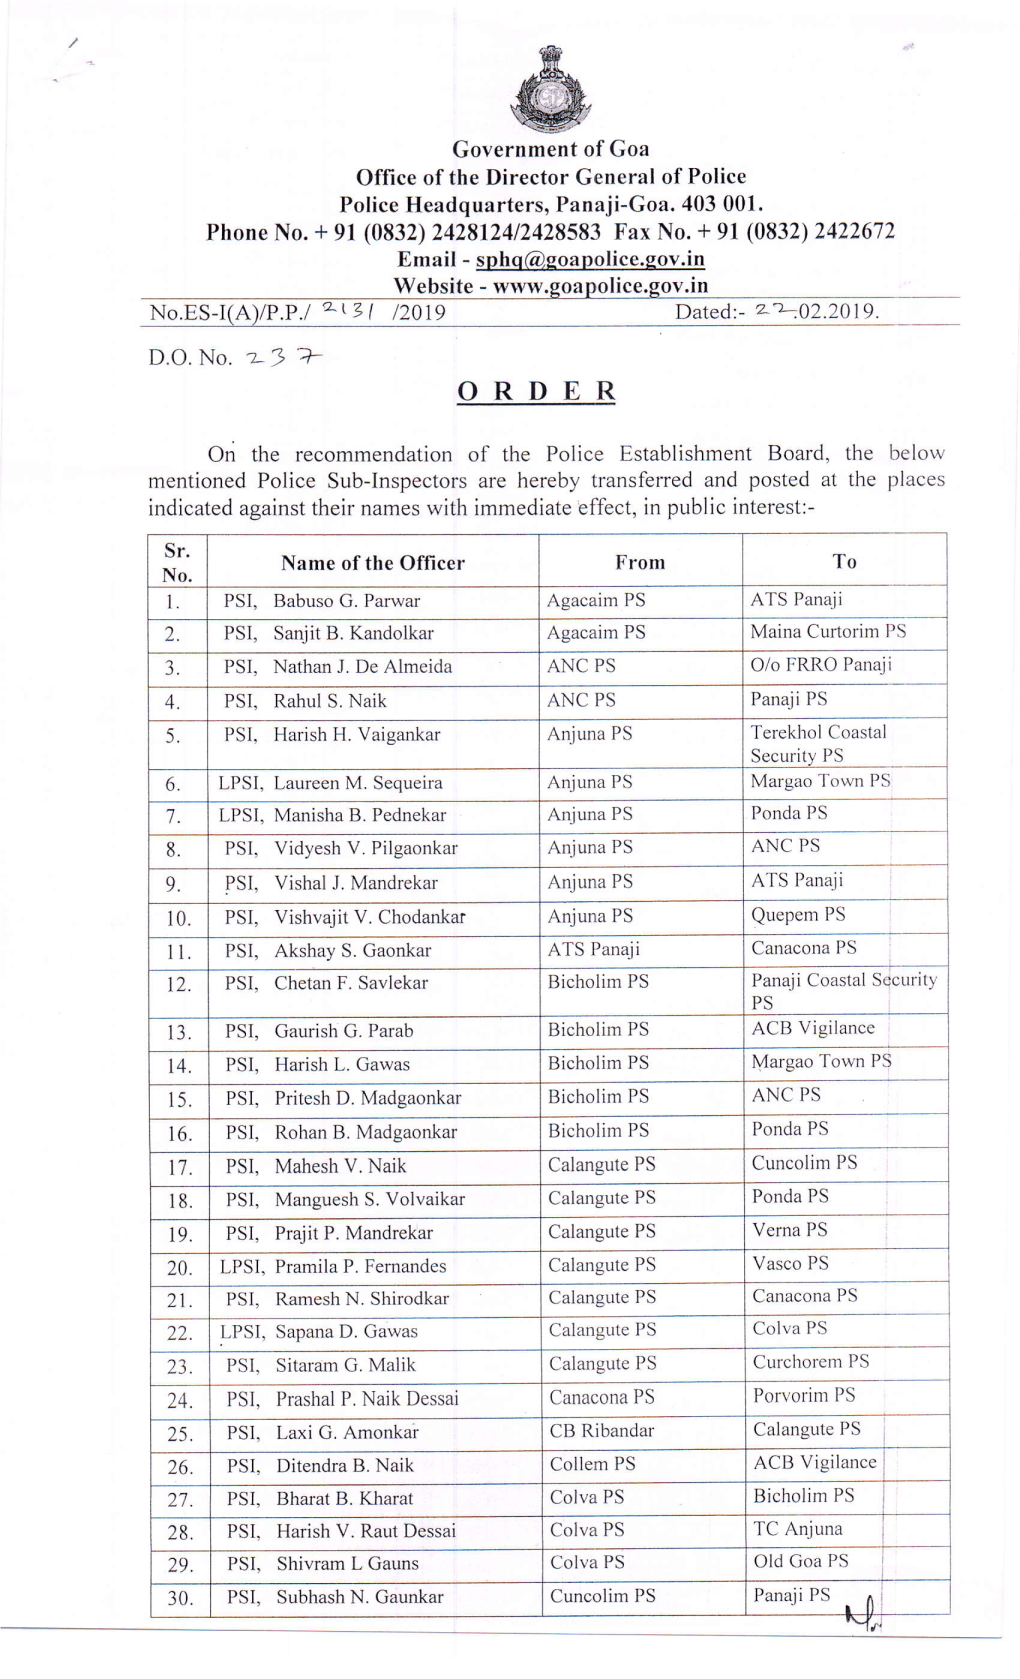 Goa Police Transfer Order of PSI's 22Feb2019